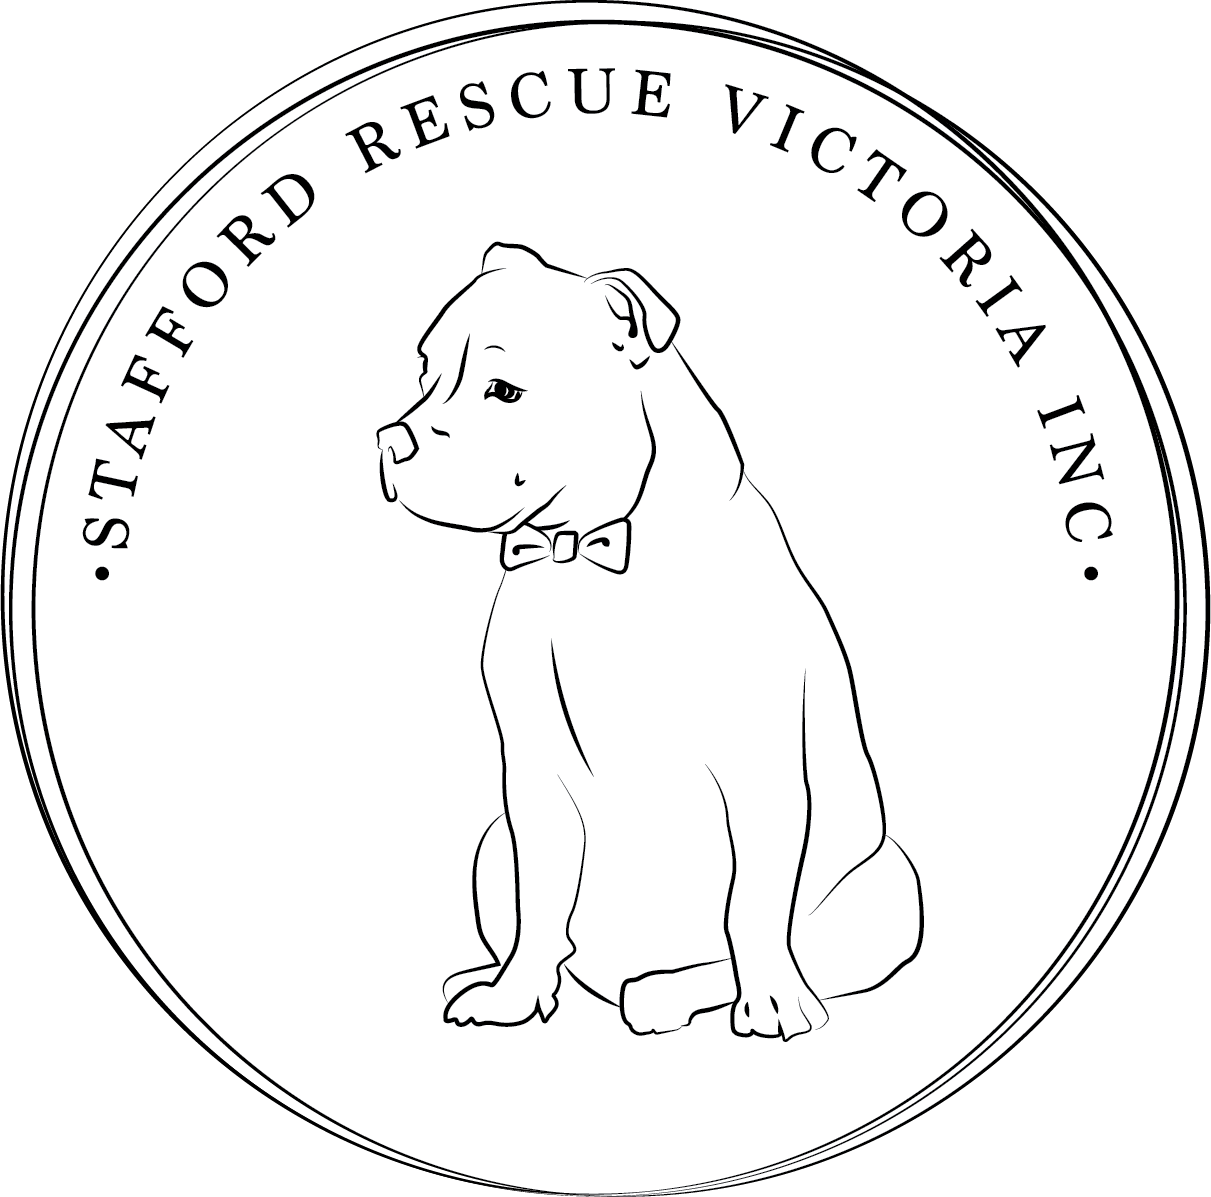 vic bull terrier rescue